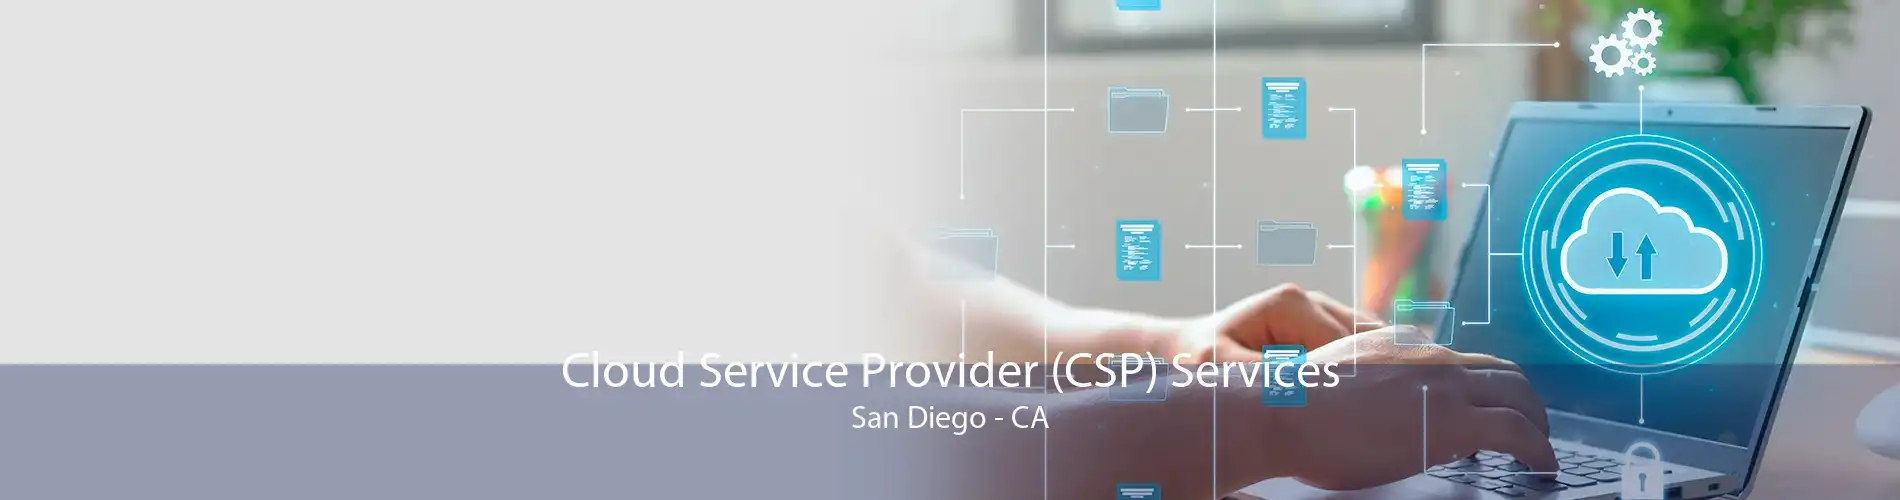 Cloud Service Provider (CSP) Services San Diego - CA